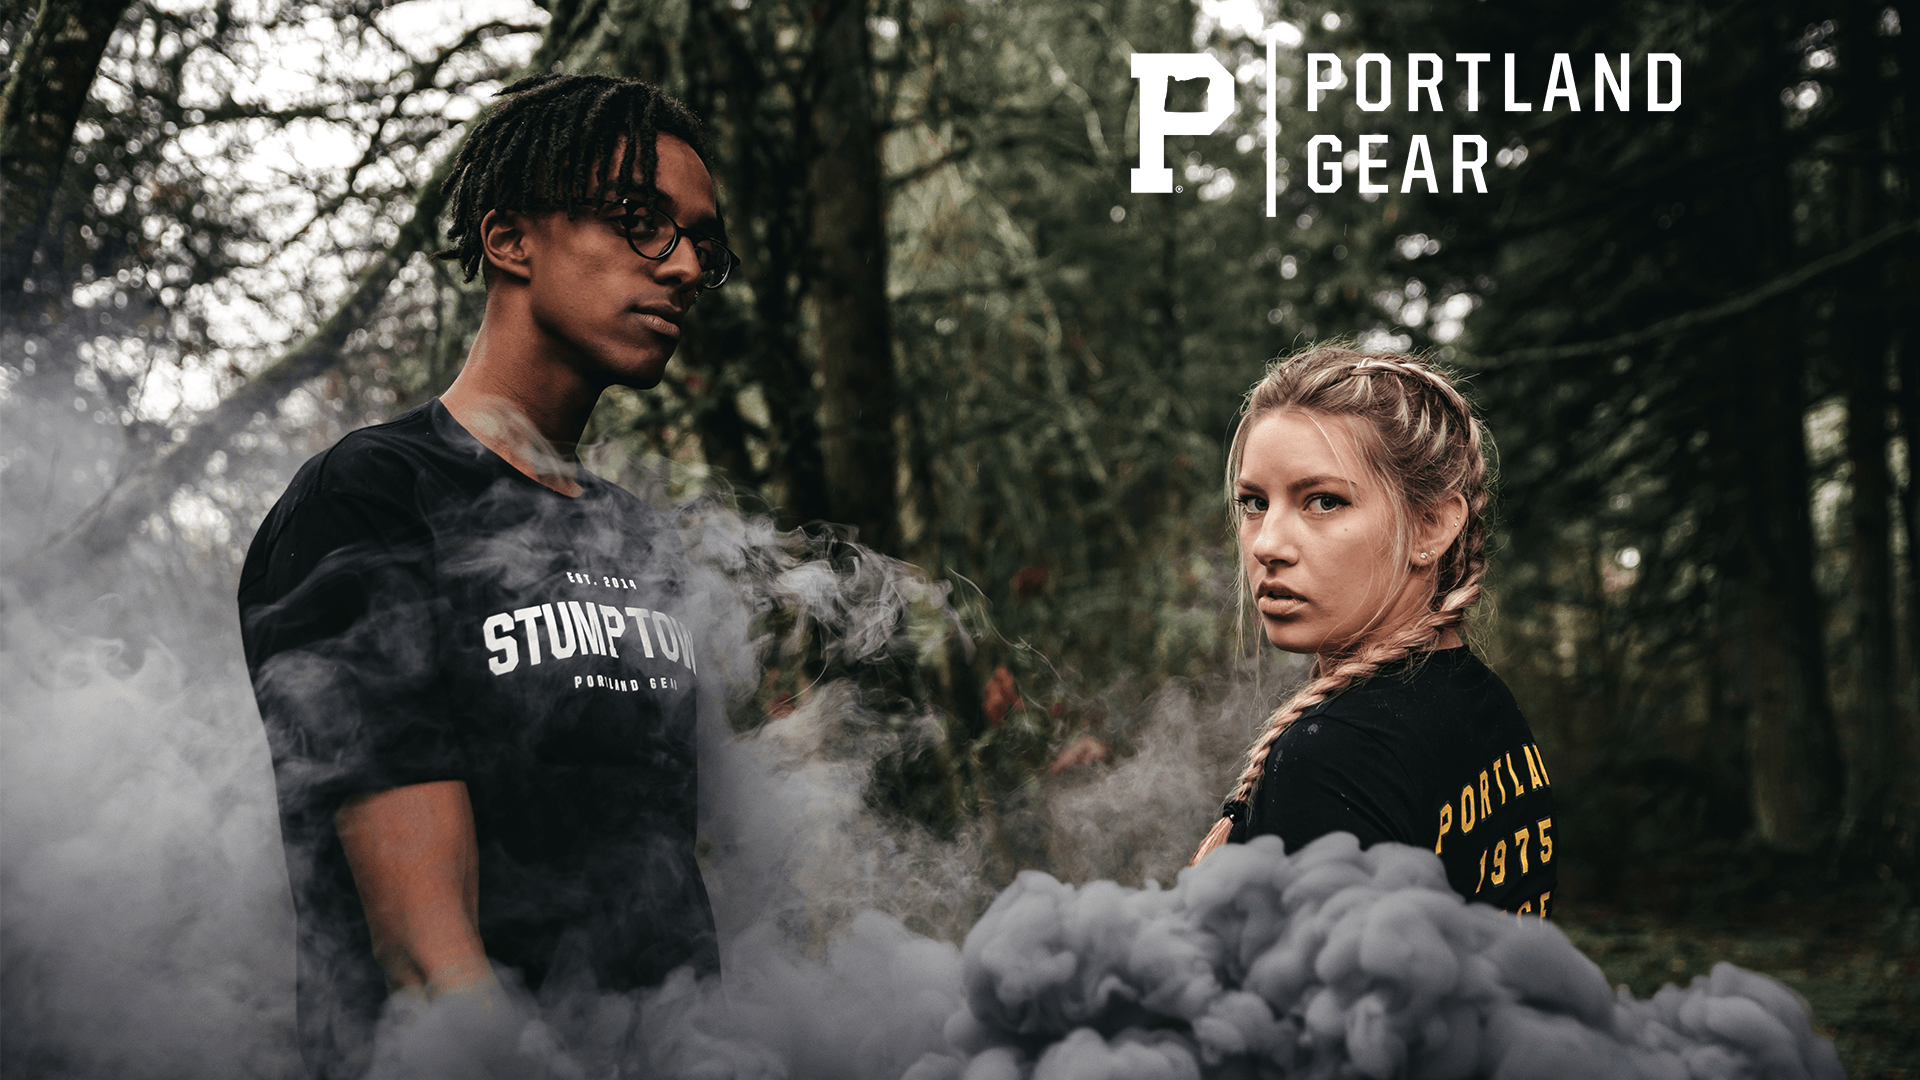 PORTLAND SOCCER LOOKBOOK - Portland Gear